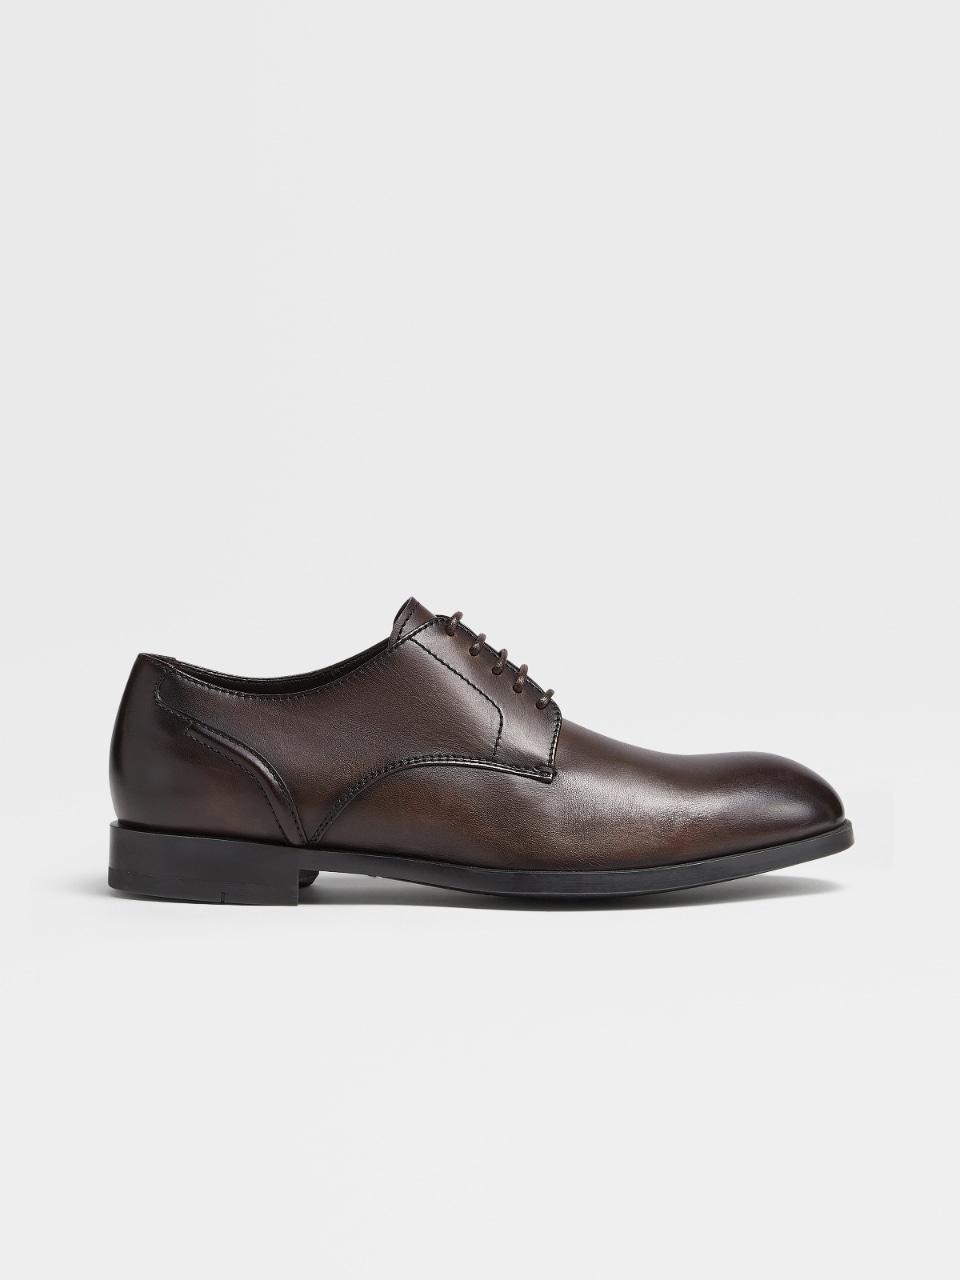 Ermenegildo Zegna Leather Derby Shoes - Brown Oxfords, Shoes - ZGN87893